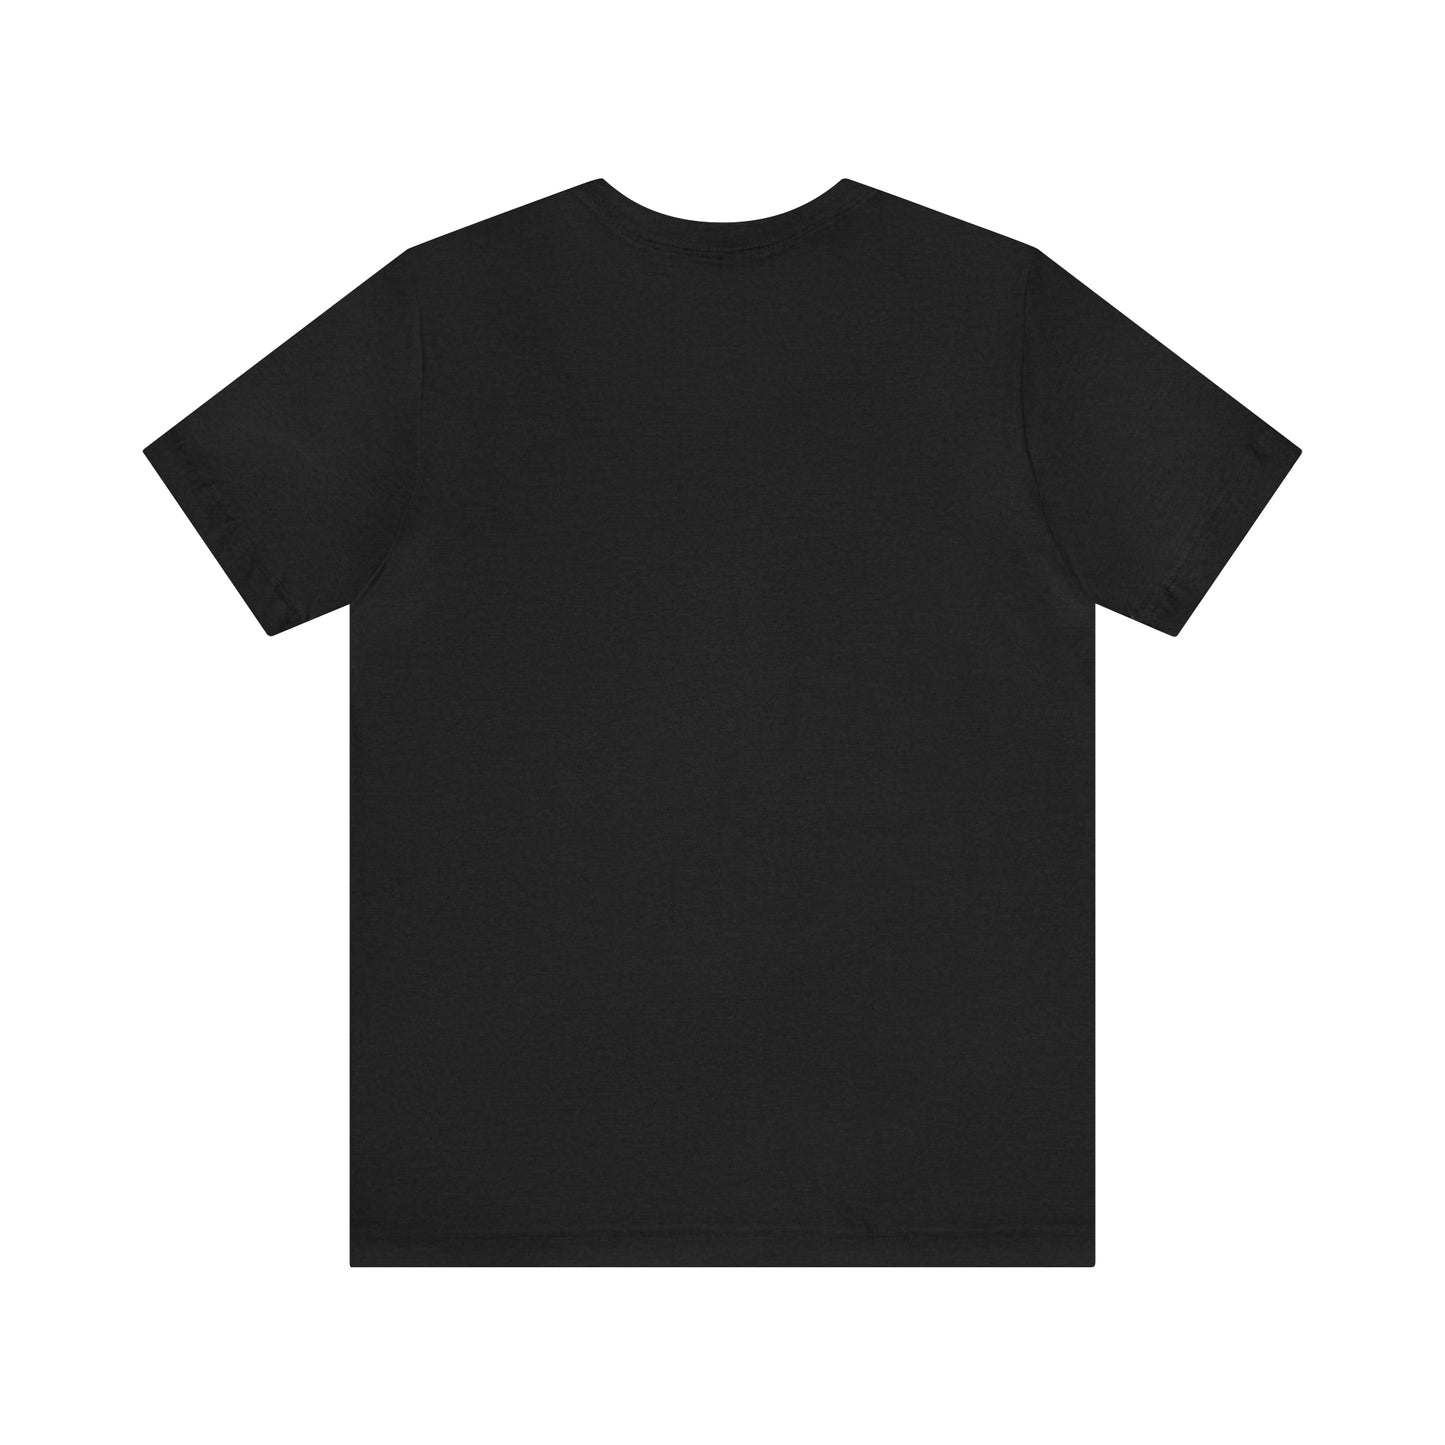 Fairycore Grunge Fae With Horse Printed T-Shirt - Short Sleeves Crewneck Unique Design T-Shirt - Boho Aesthetic Unisex Tee